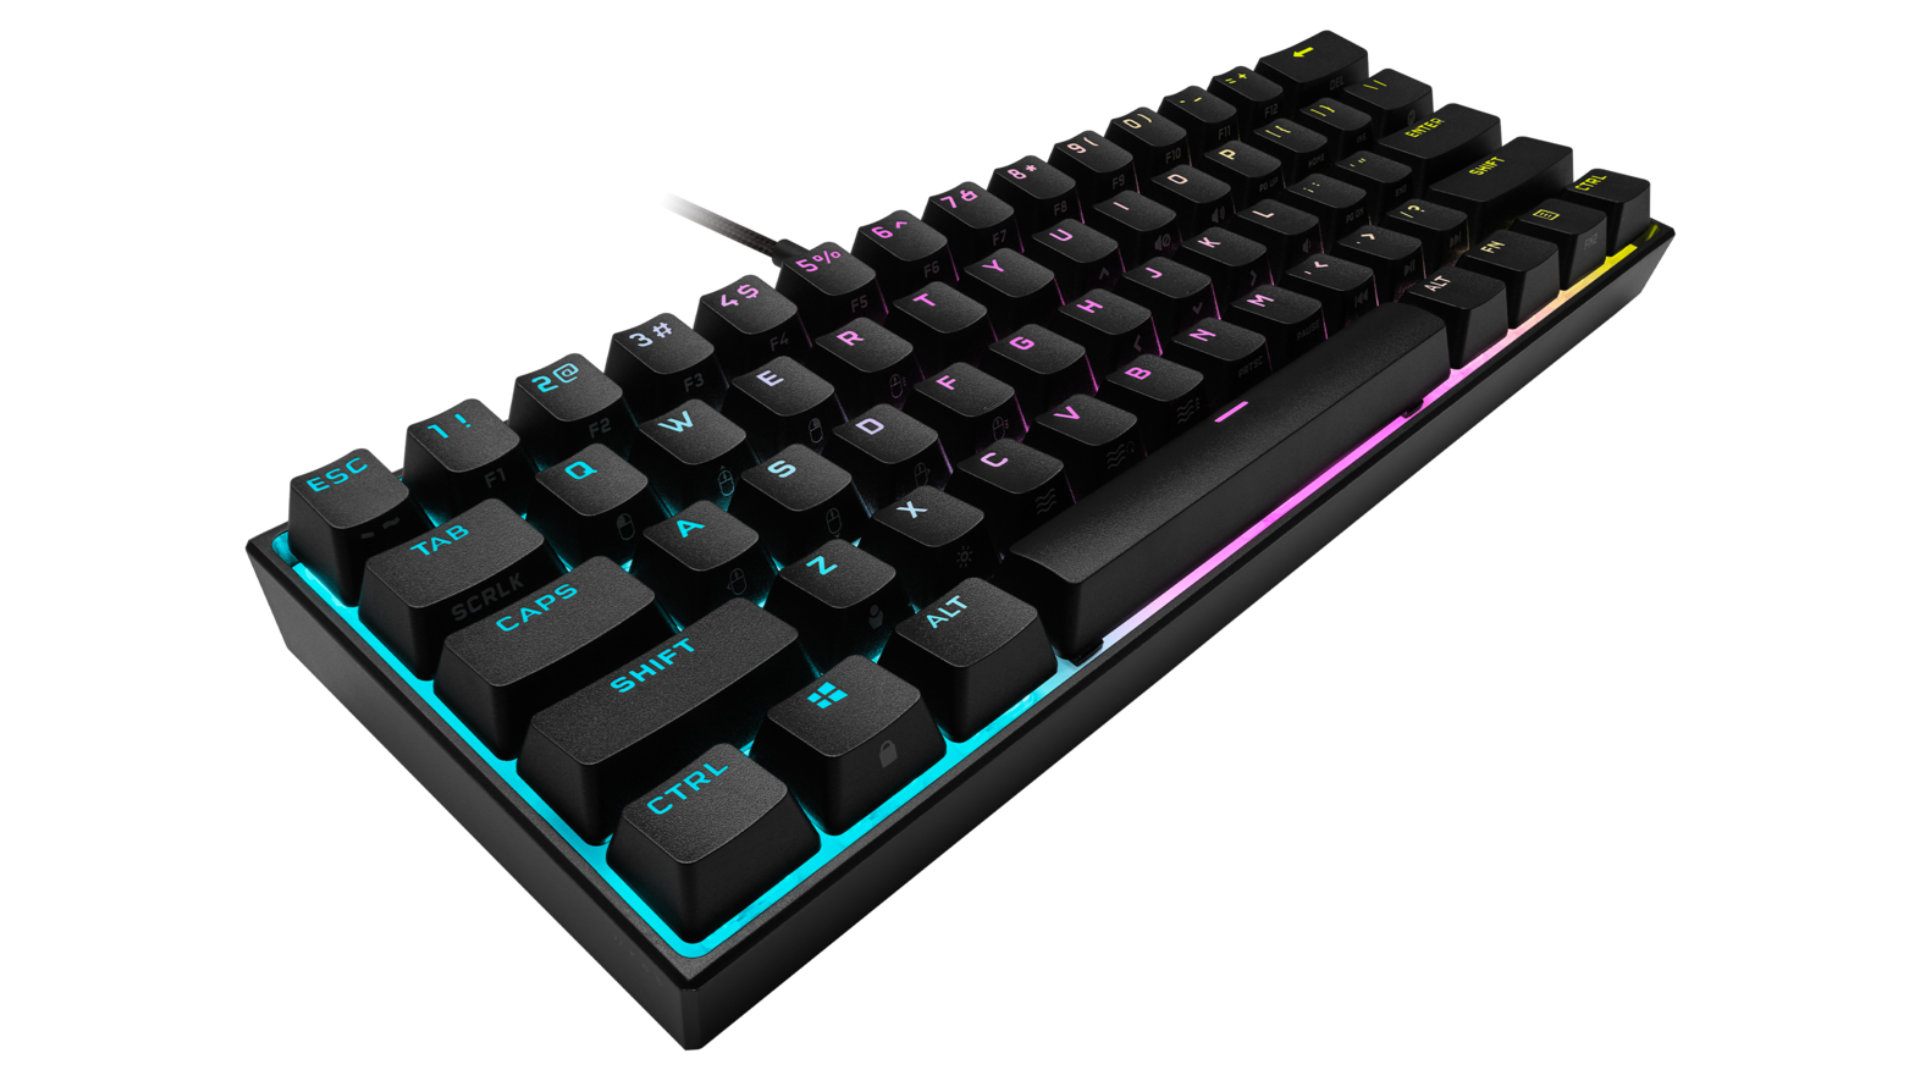 Corsair K65 RGB Mini review: a stunning 60% gaming keyboard